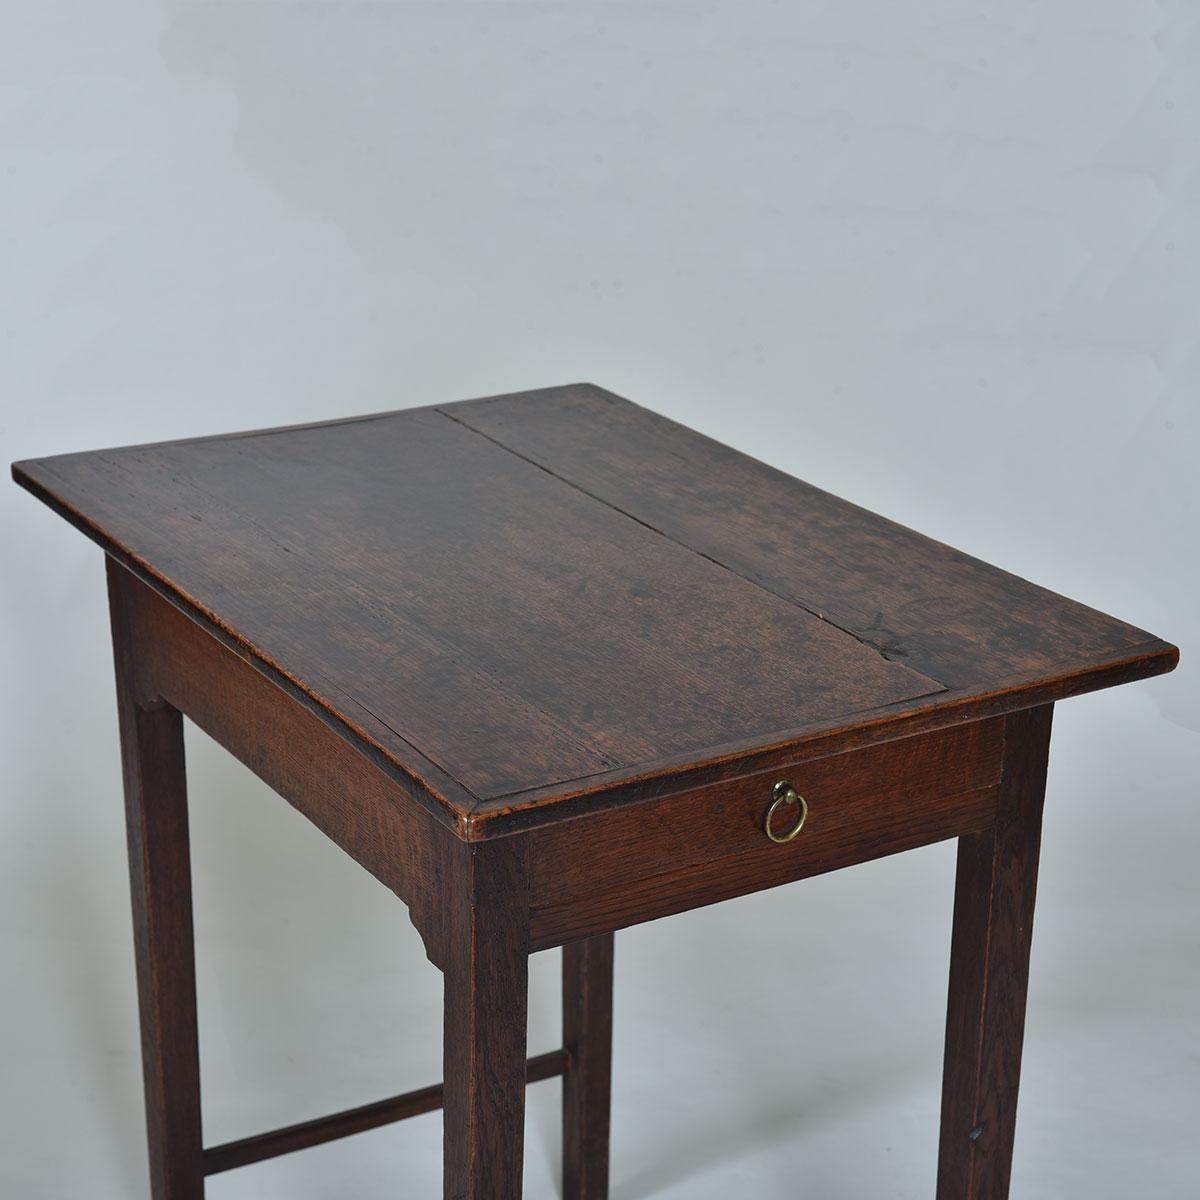 18th century Small Oak Side Table